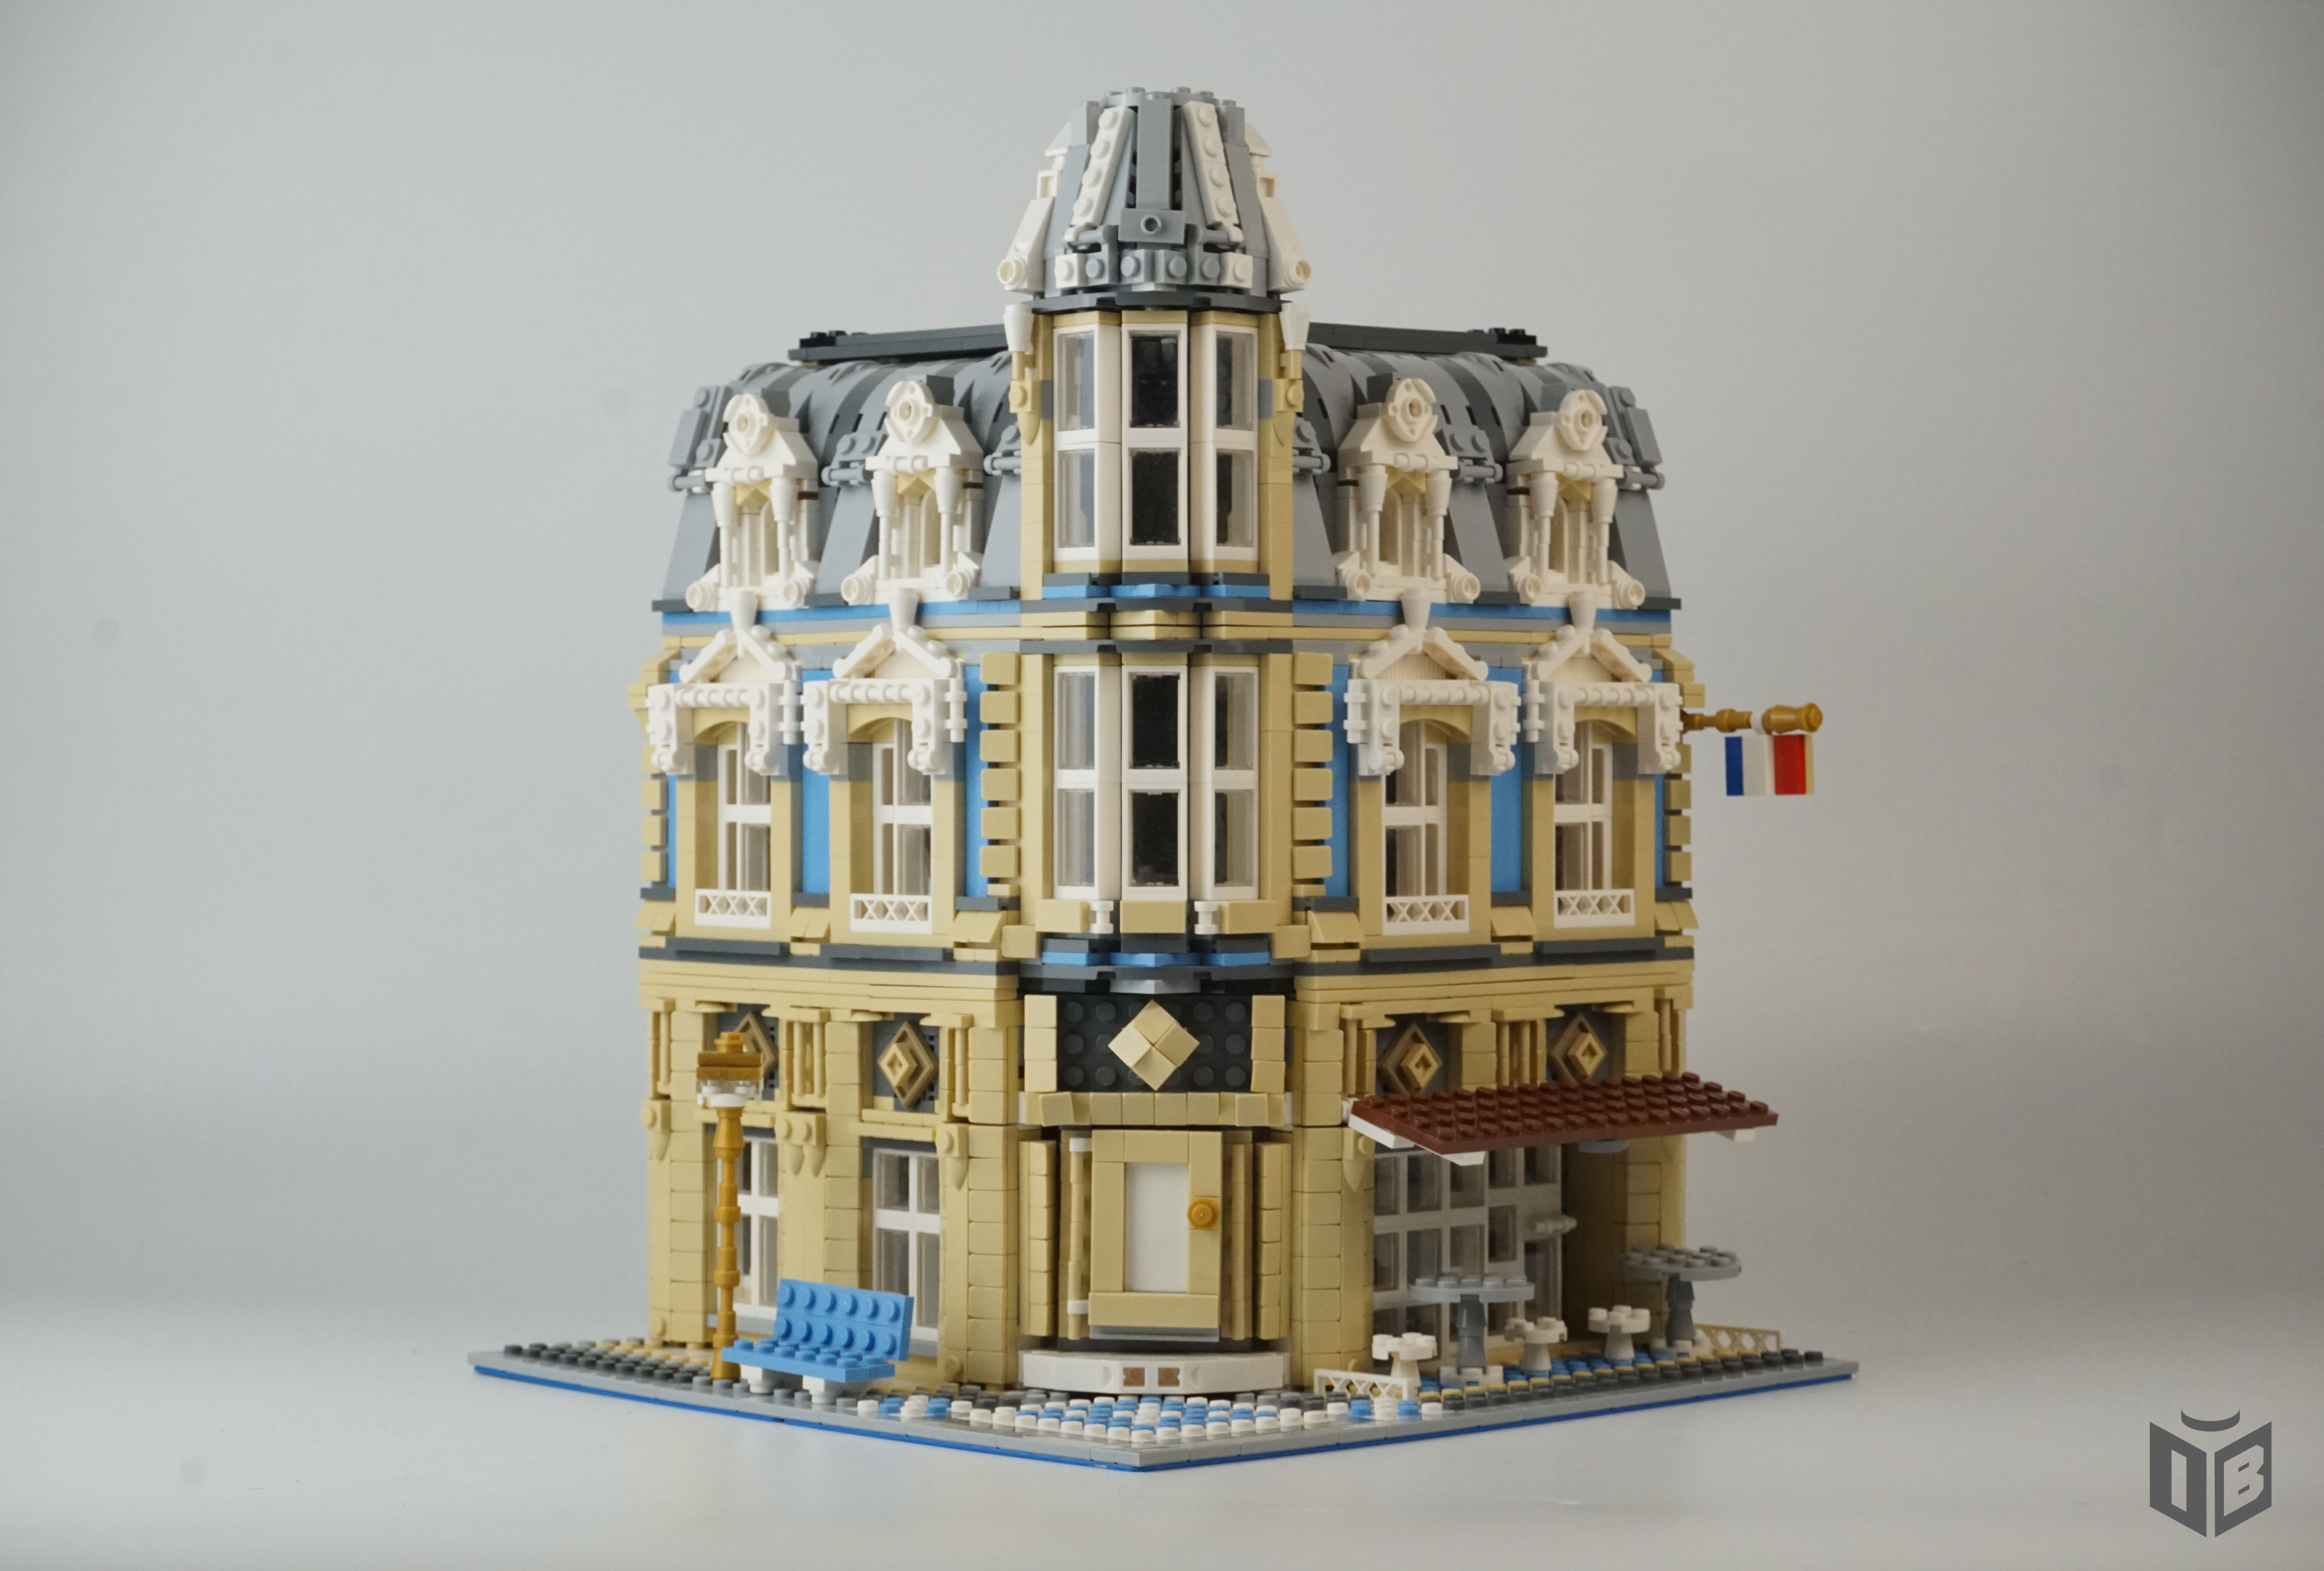 LEGO MOC 10214 Tower Bridge Alternative build Rebrickable - Build with